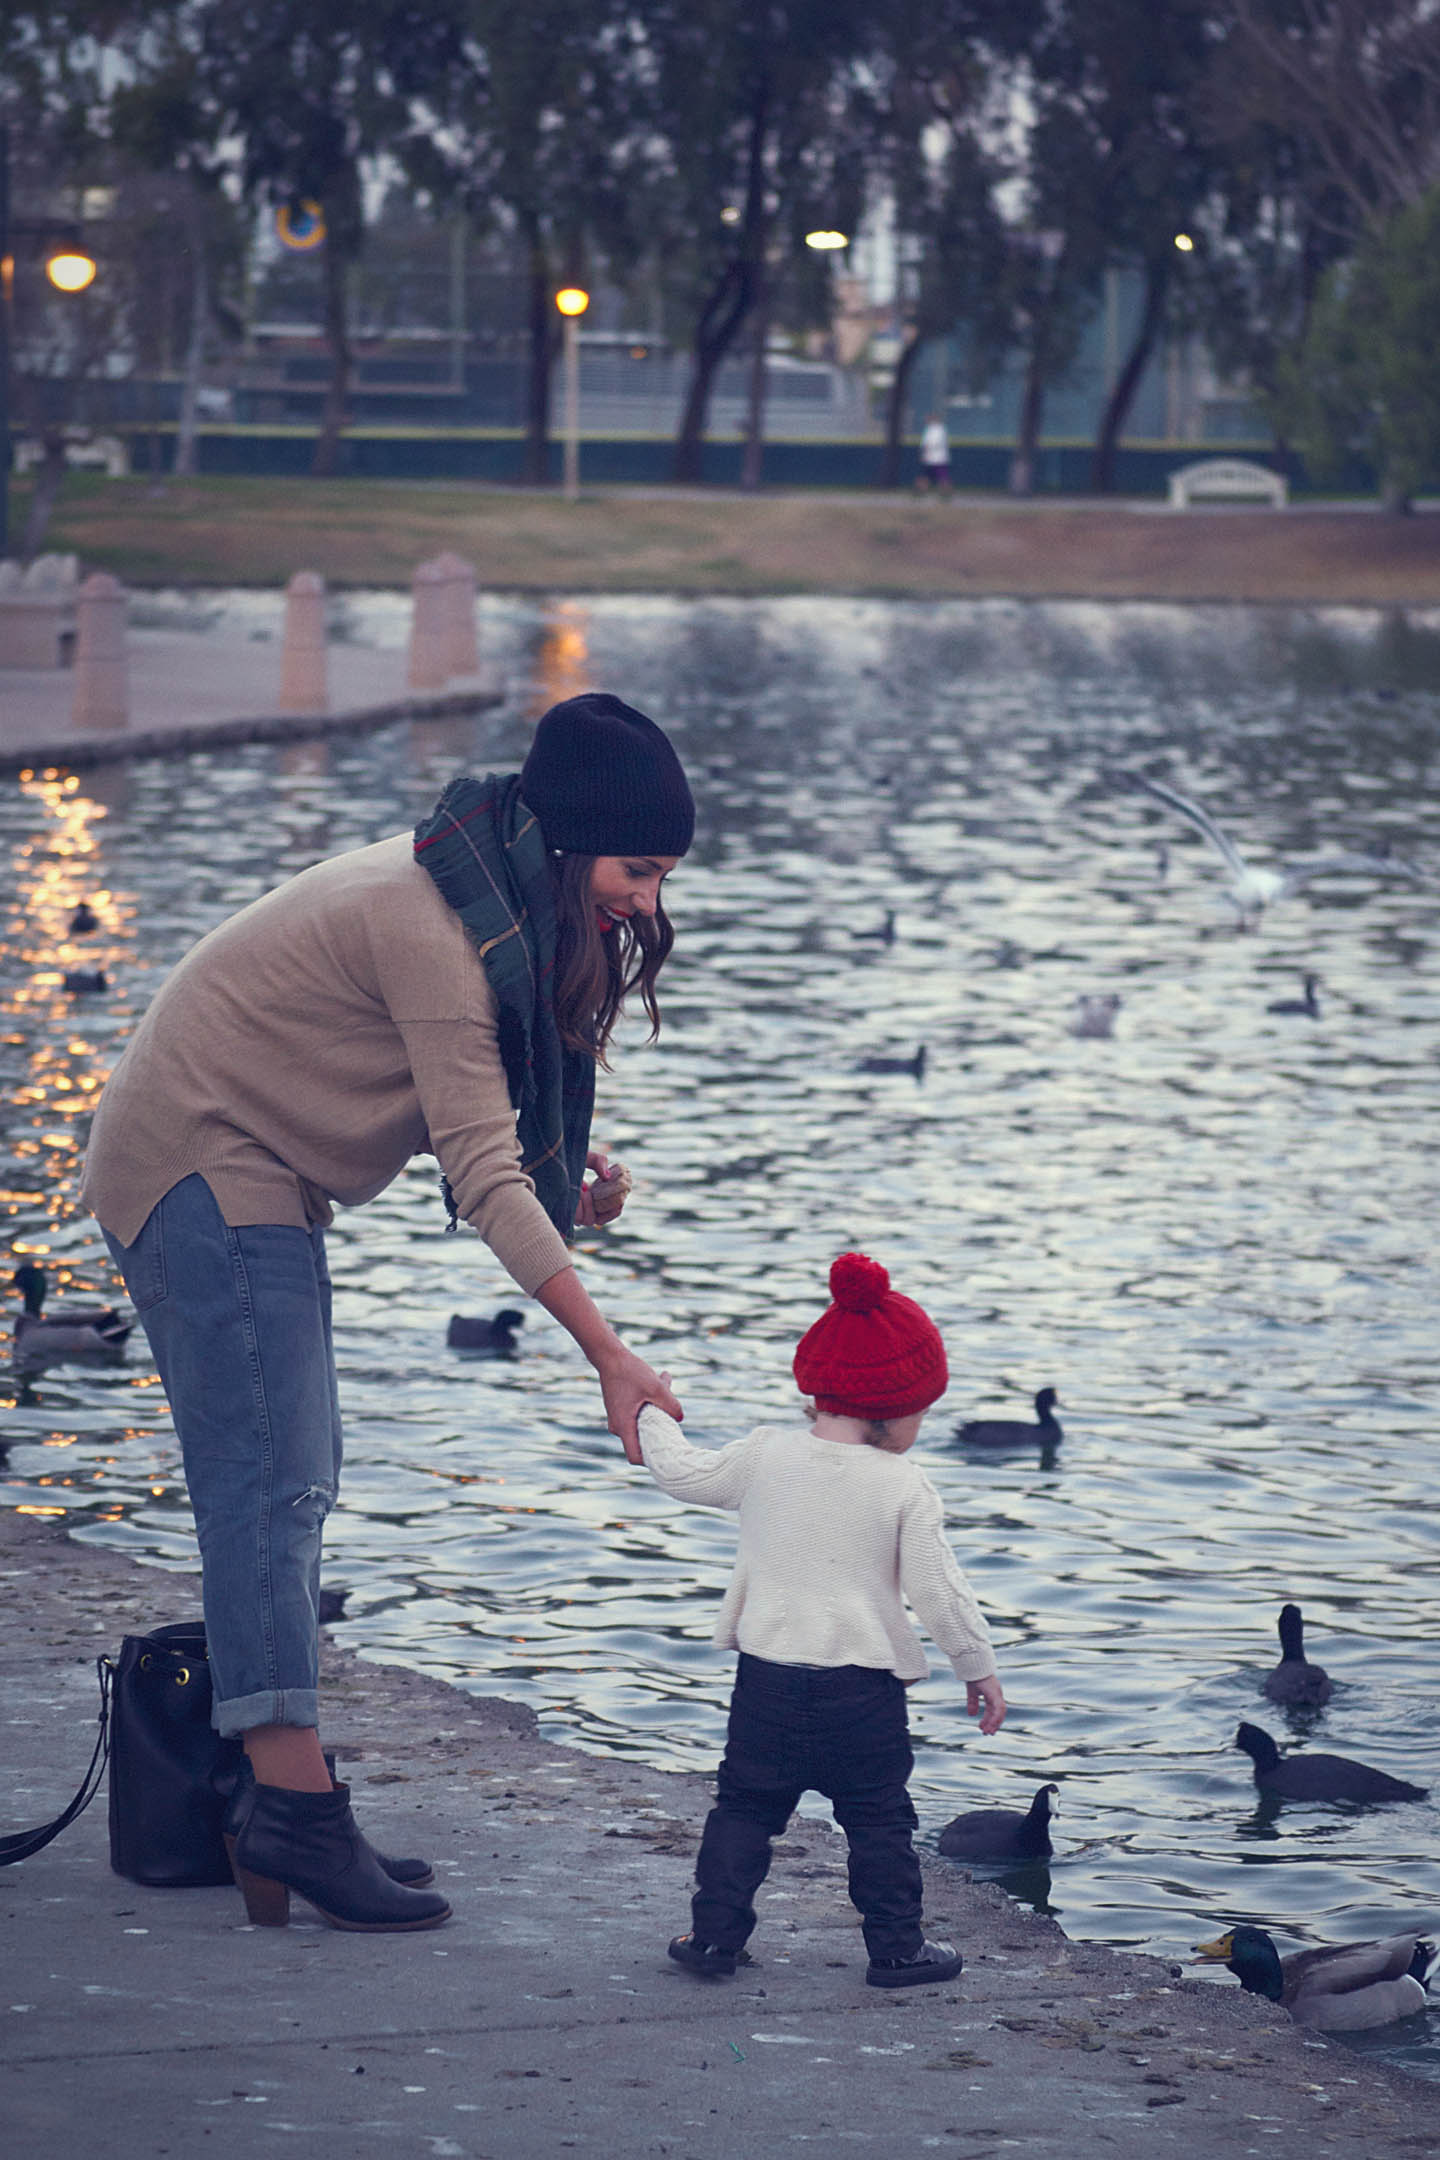 feeding the ducks at the park